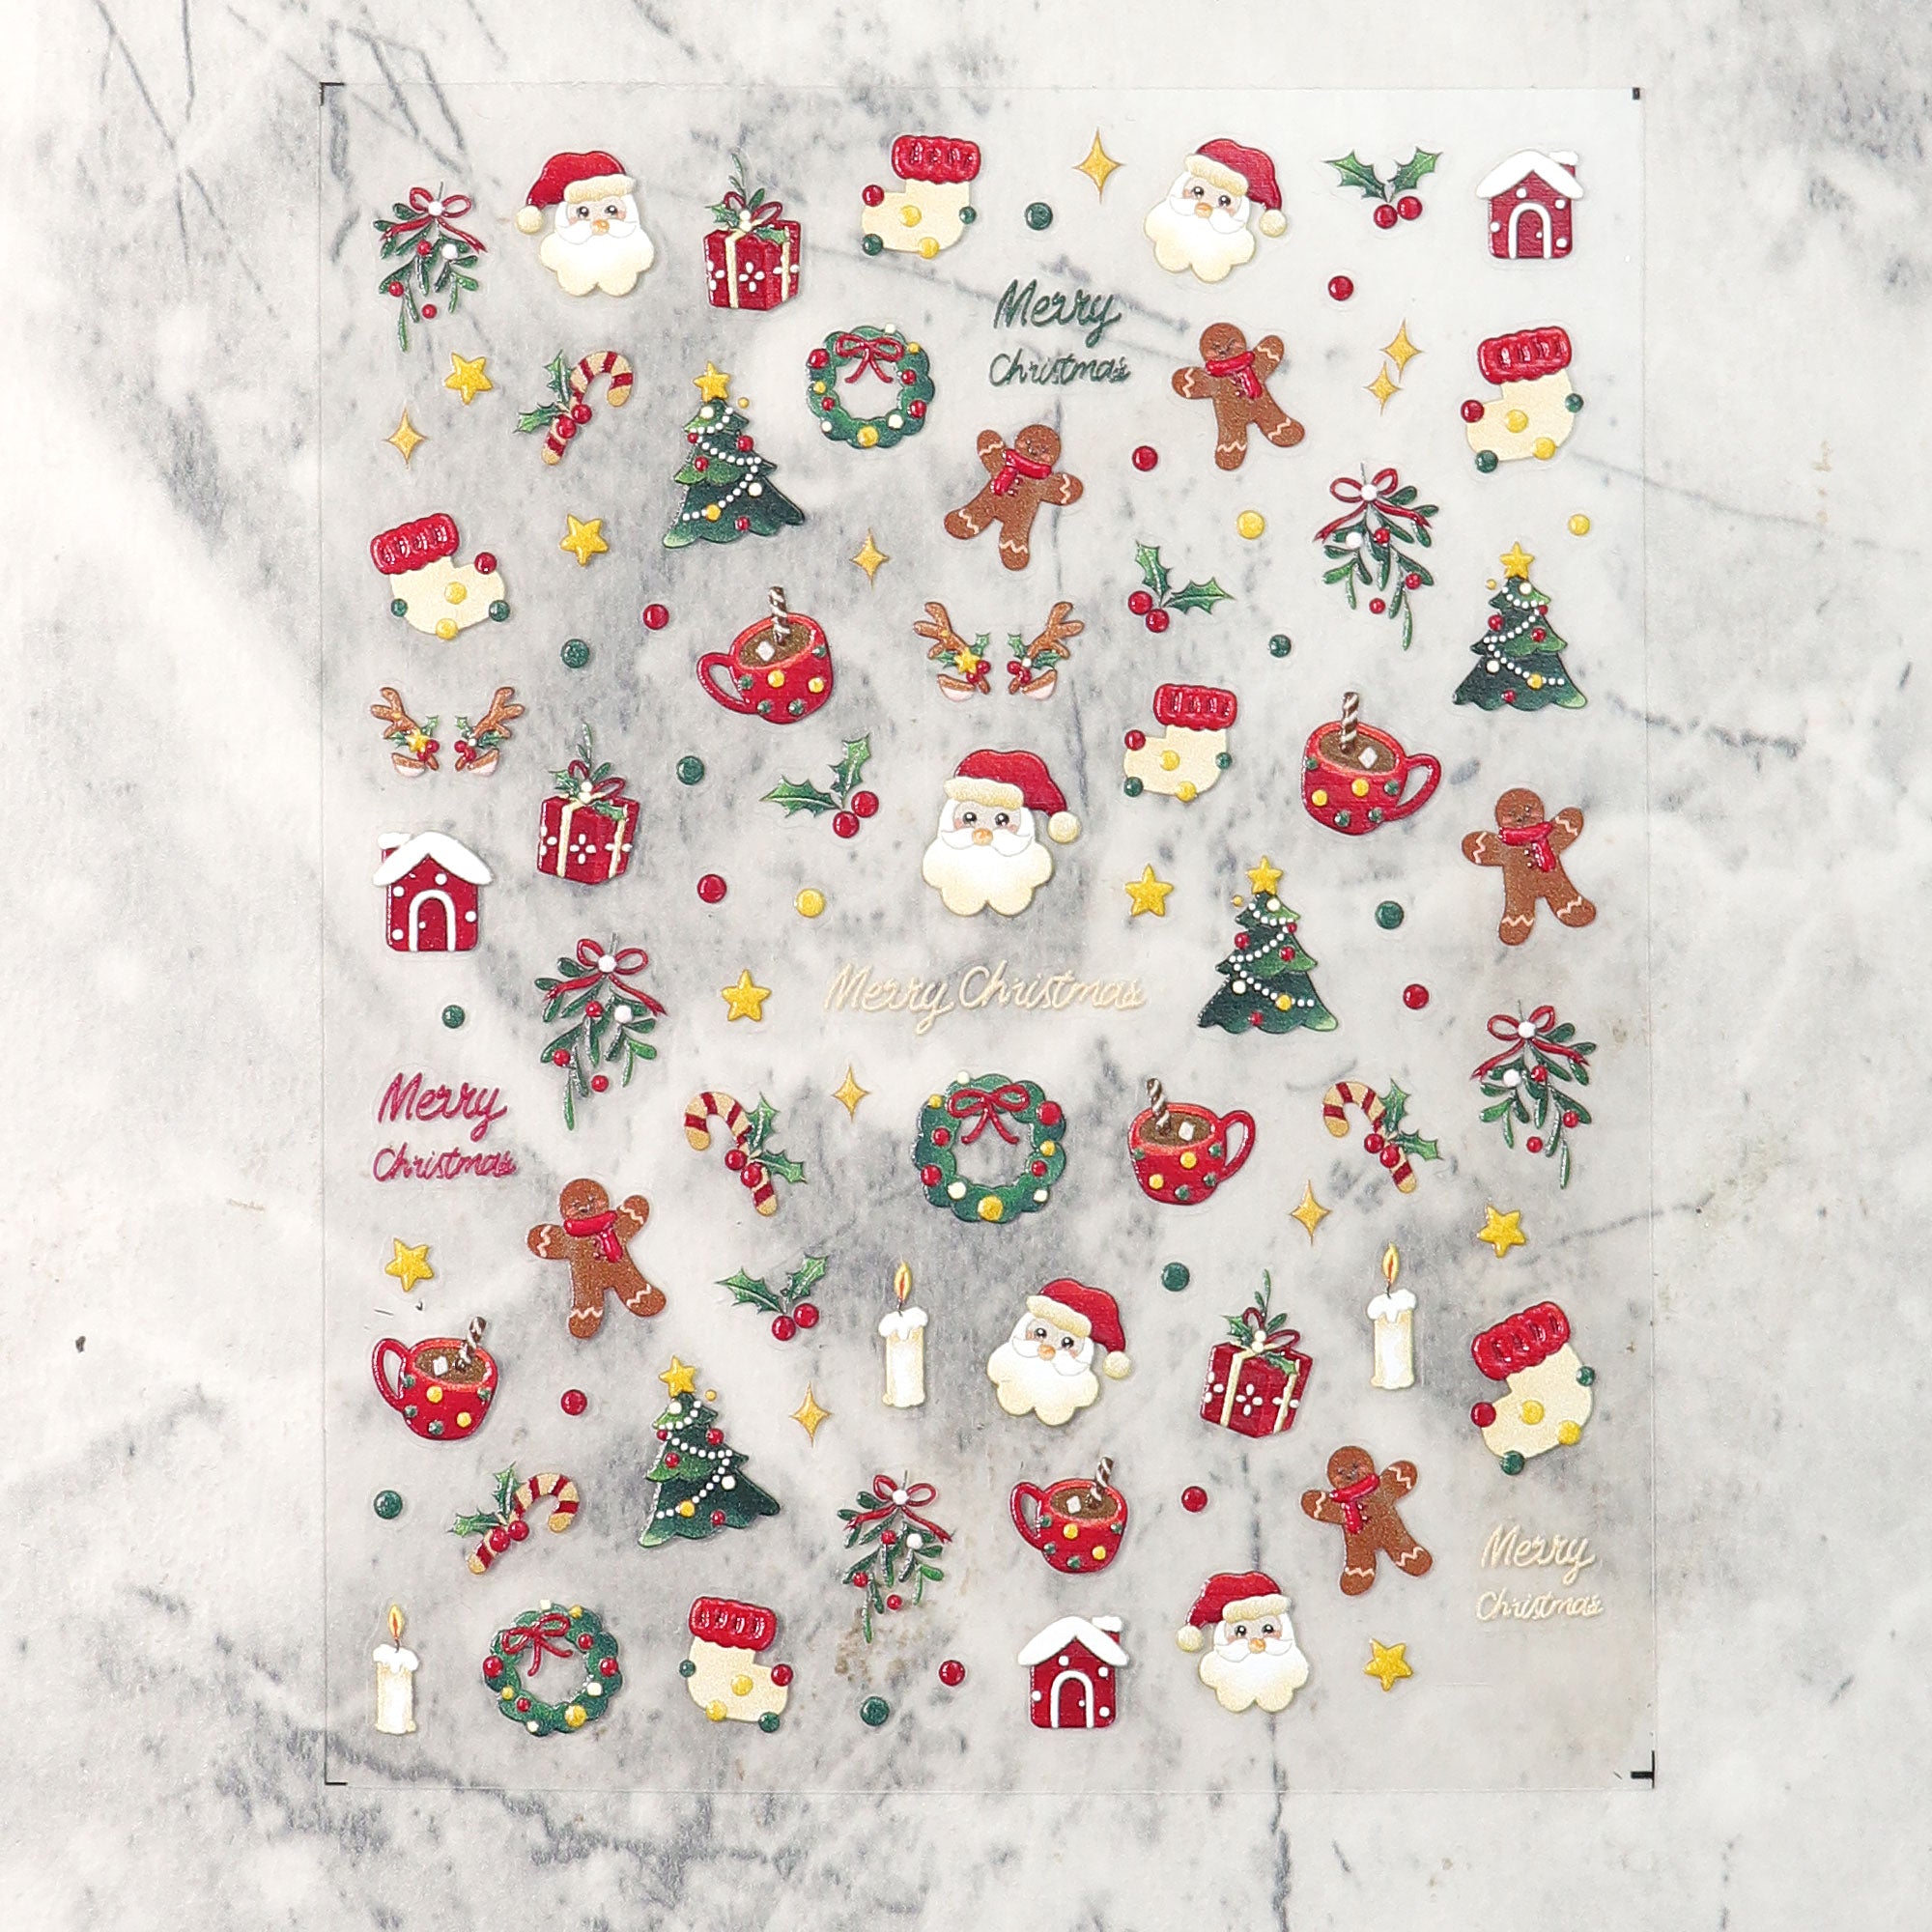 5D Nail Sticker - Christmas 04